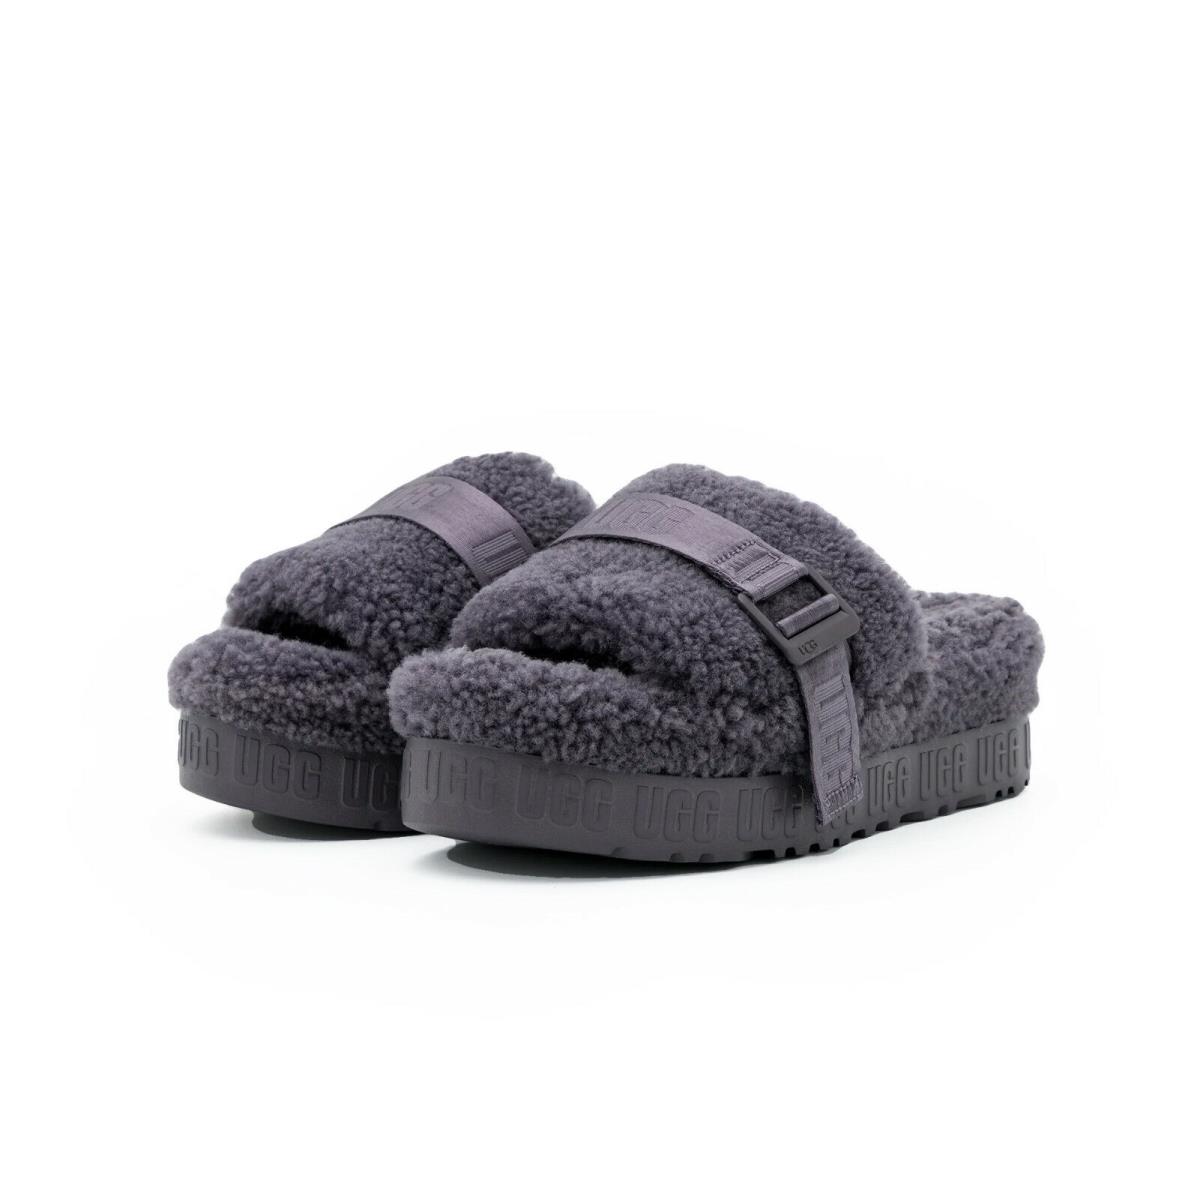 Women`s Ugg Brand Fluffita Flatform Slide Comfy Shoes Slipper Sandals Shade - Gray